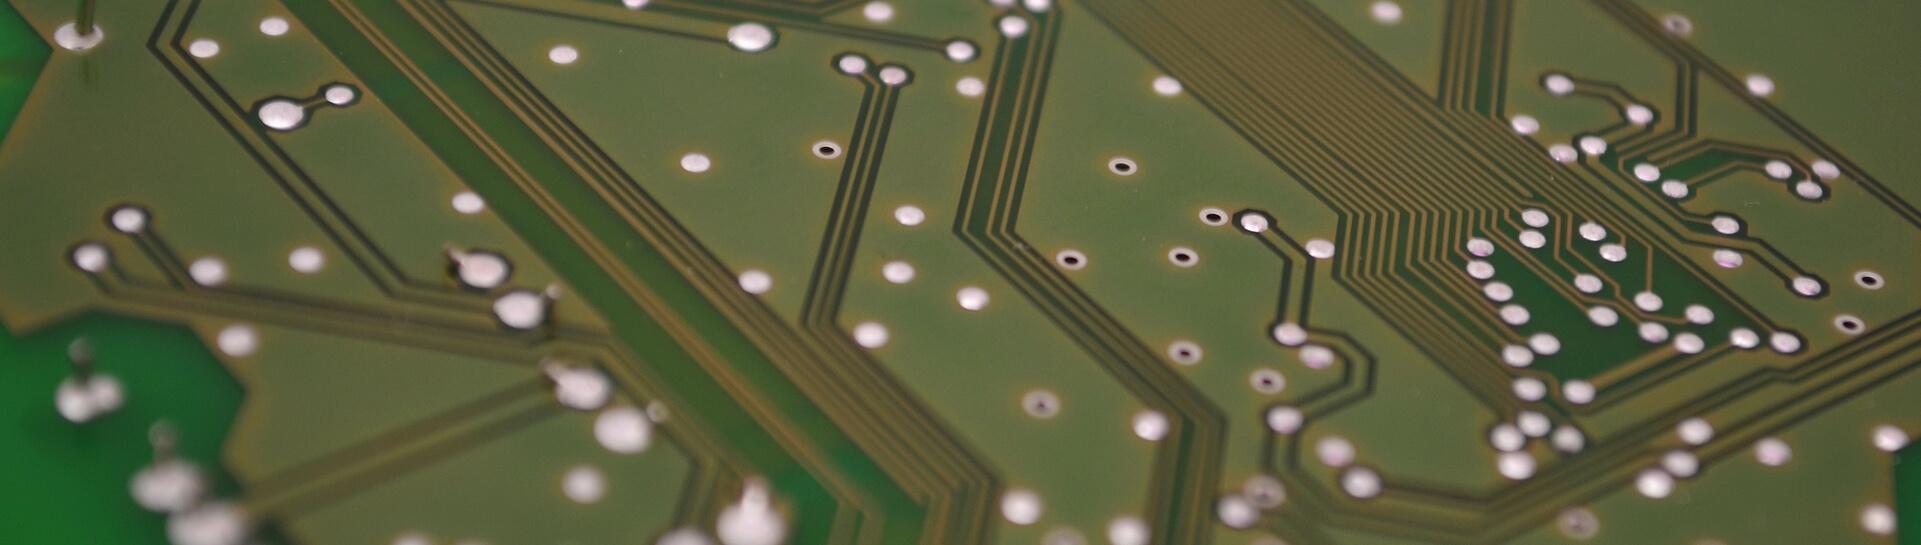 Closeup photo of circuit board - Tulane School of Professional Advancement